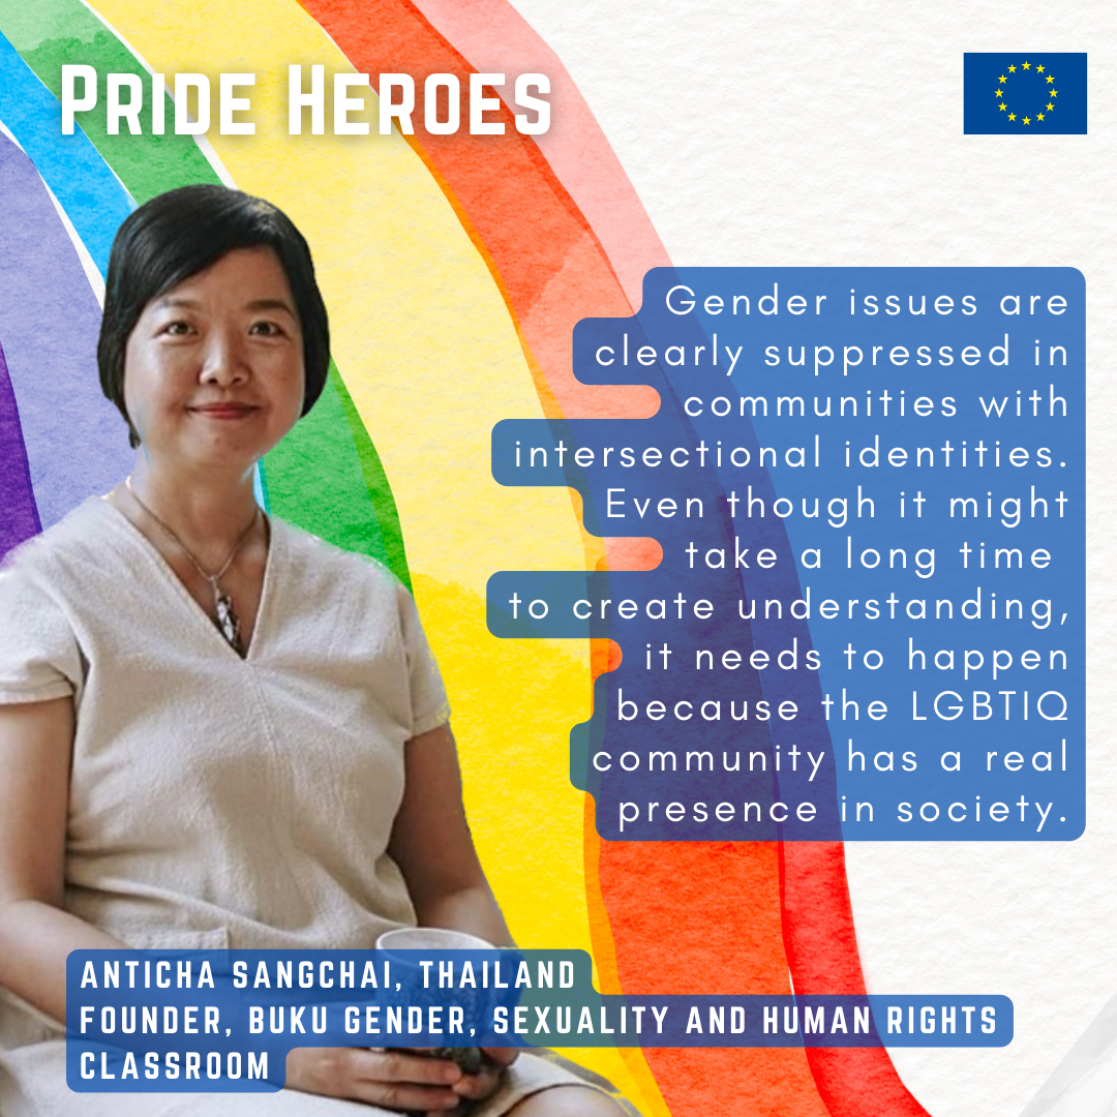 Anticha Sangchai quote as part of Pride Heroes series